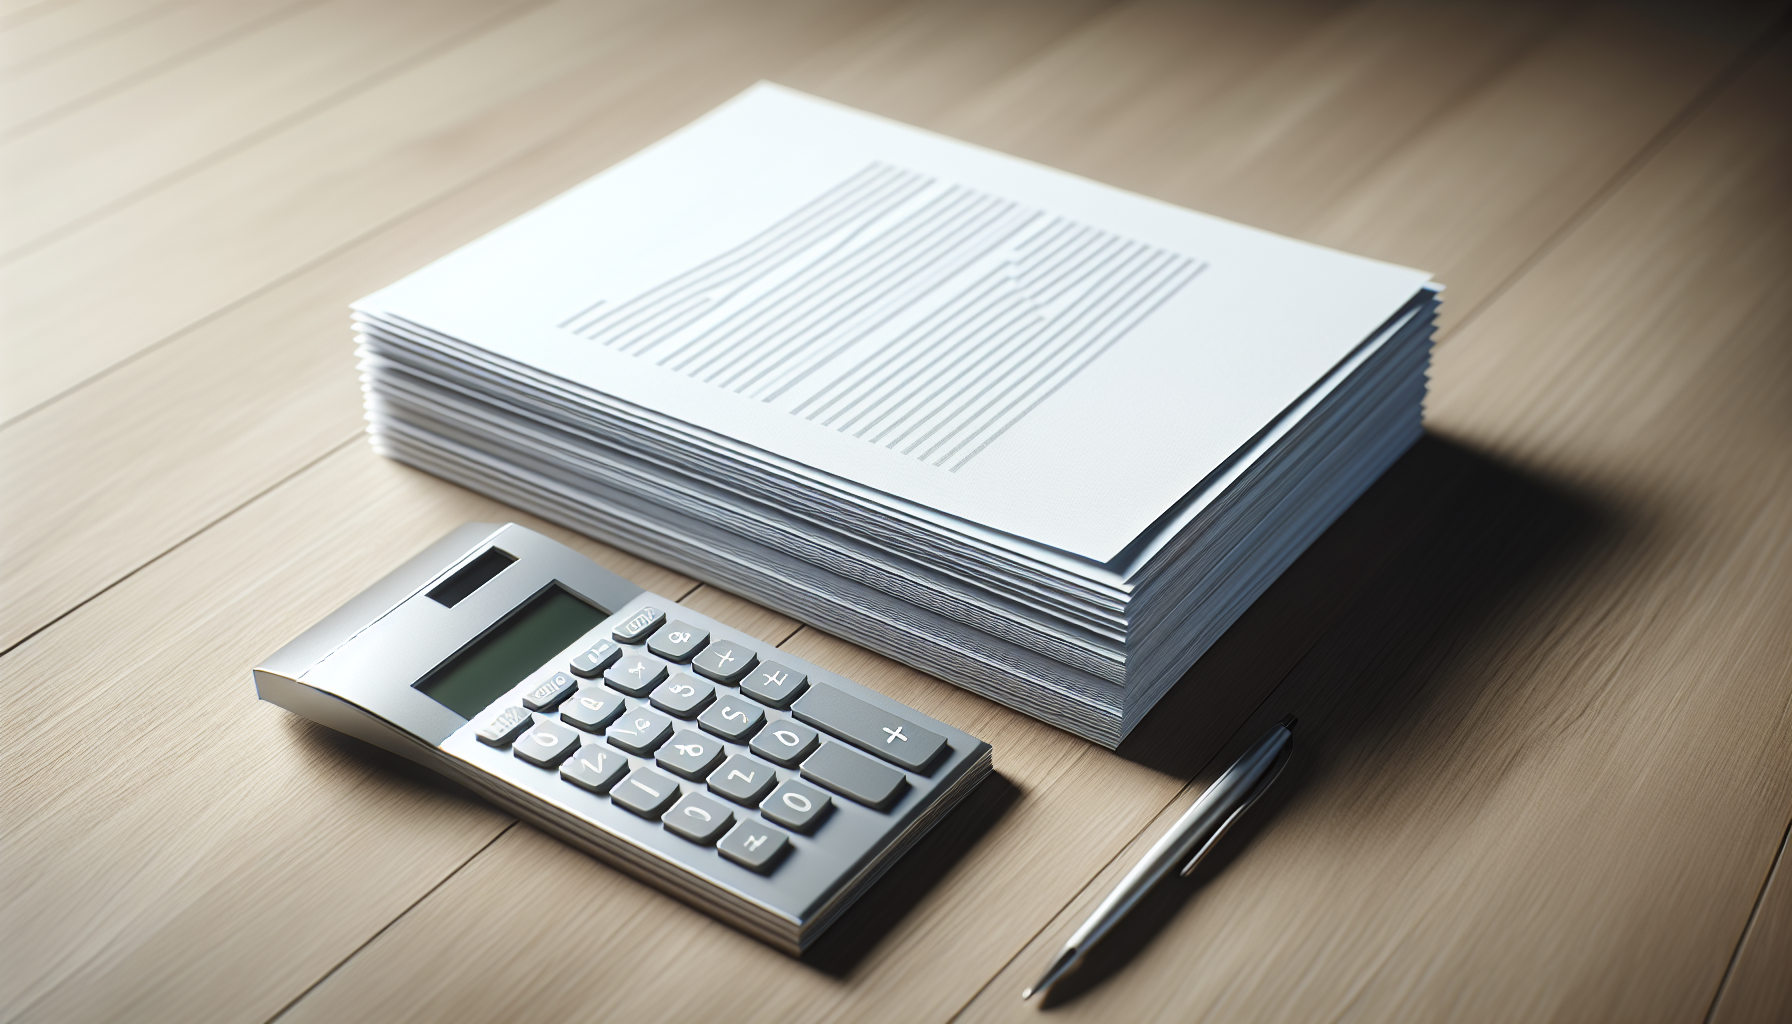 Financial documents and a calculator representing compensation and reimbursement